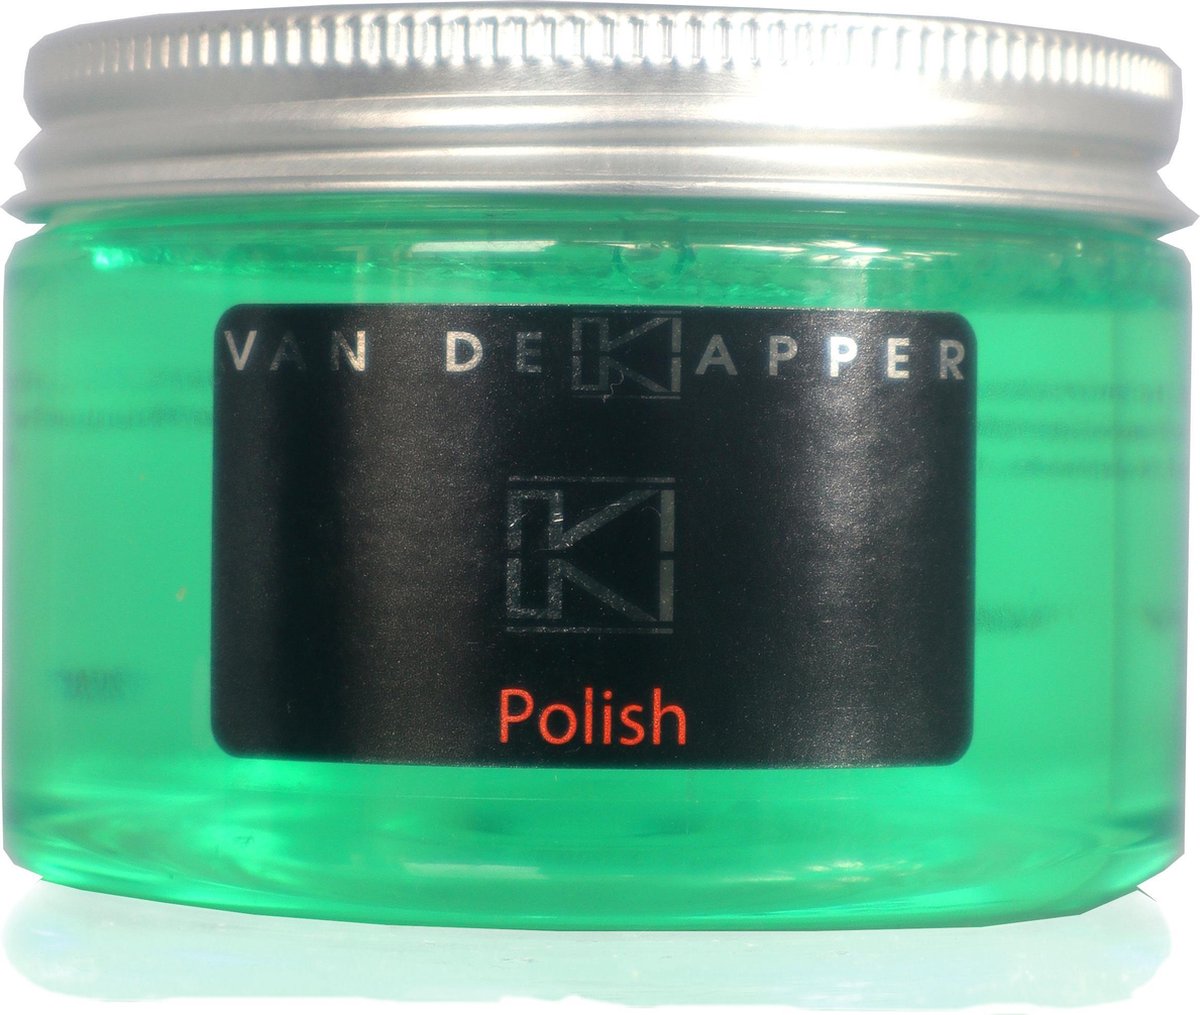 Polish VandeKapper